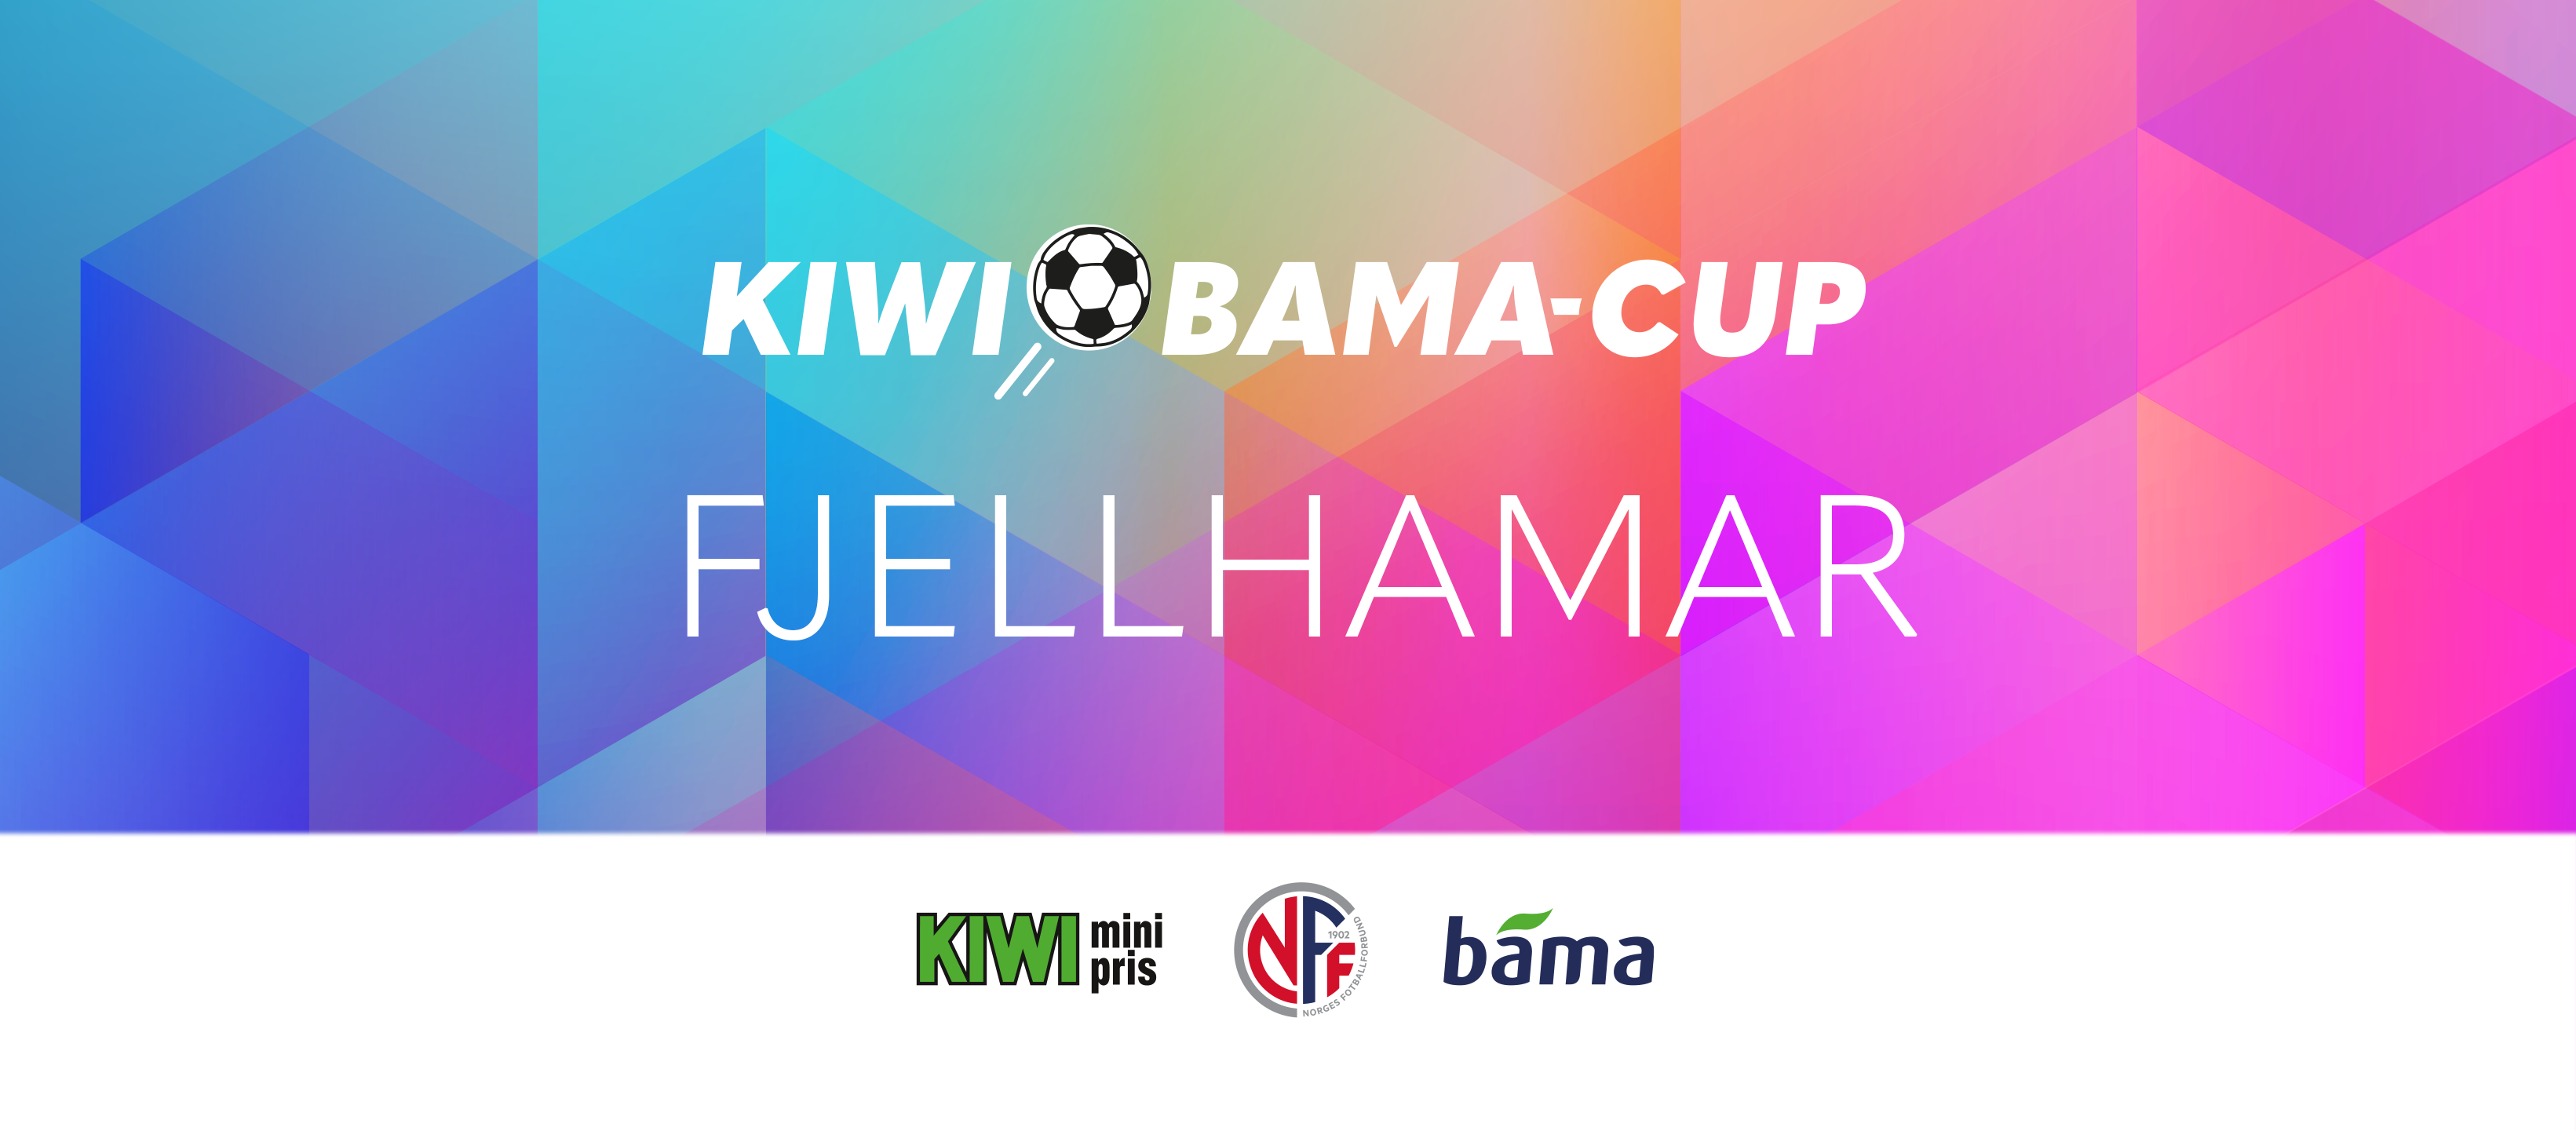 FB-BANNER KIWI-BAMA-Cup - Fjellhamar.png